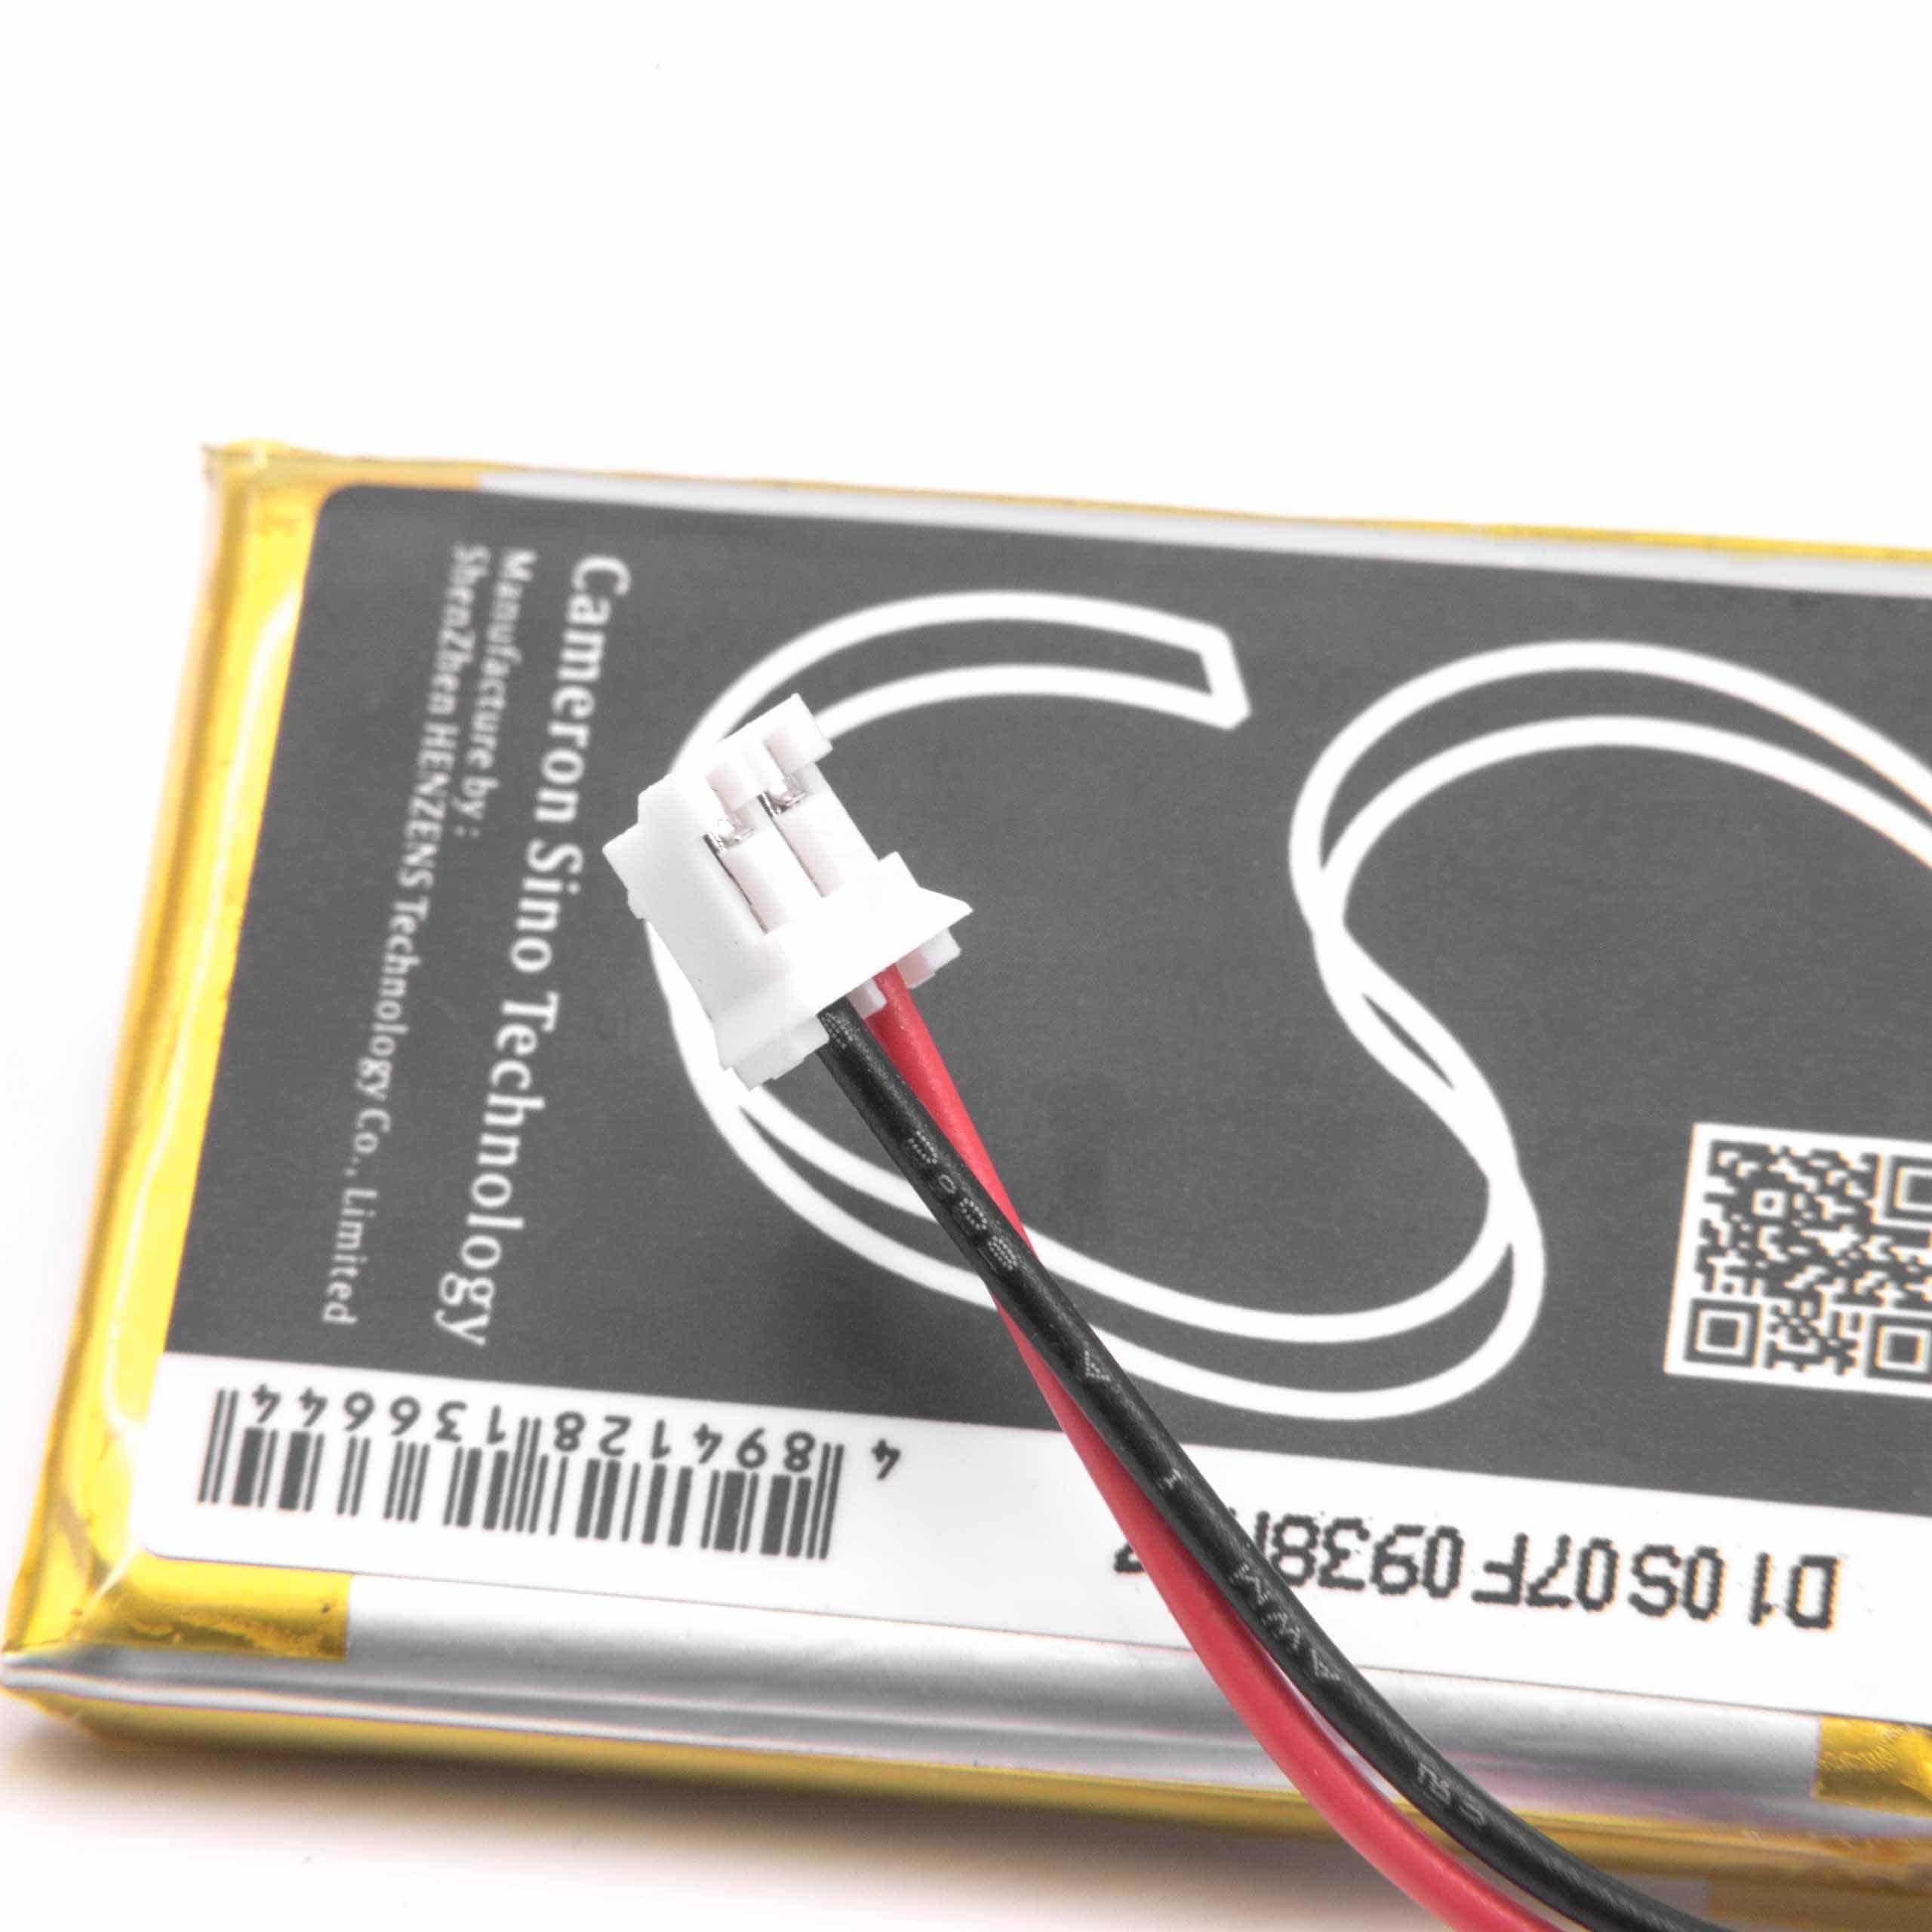 Batería reemplaza Minelab 0303-0036 para dispositivo medición Minelab - 1100 mAh 3,7 V Li-poli